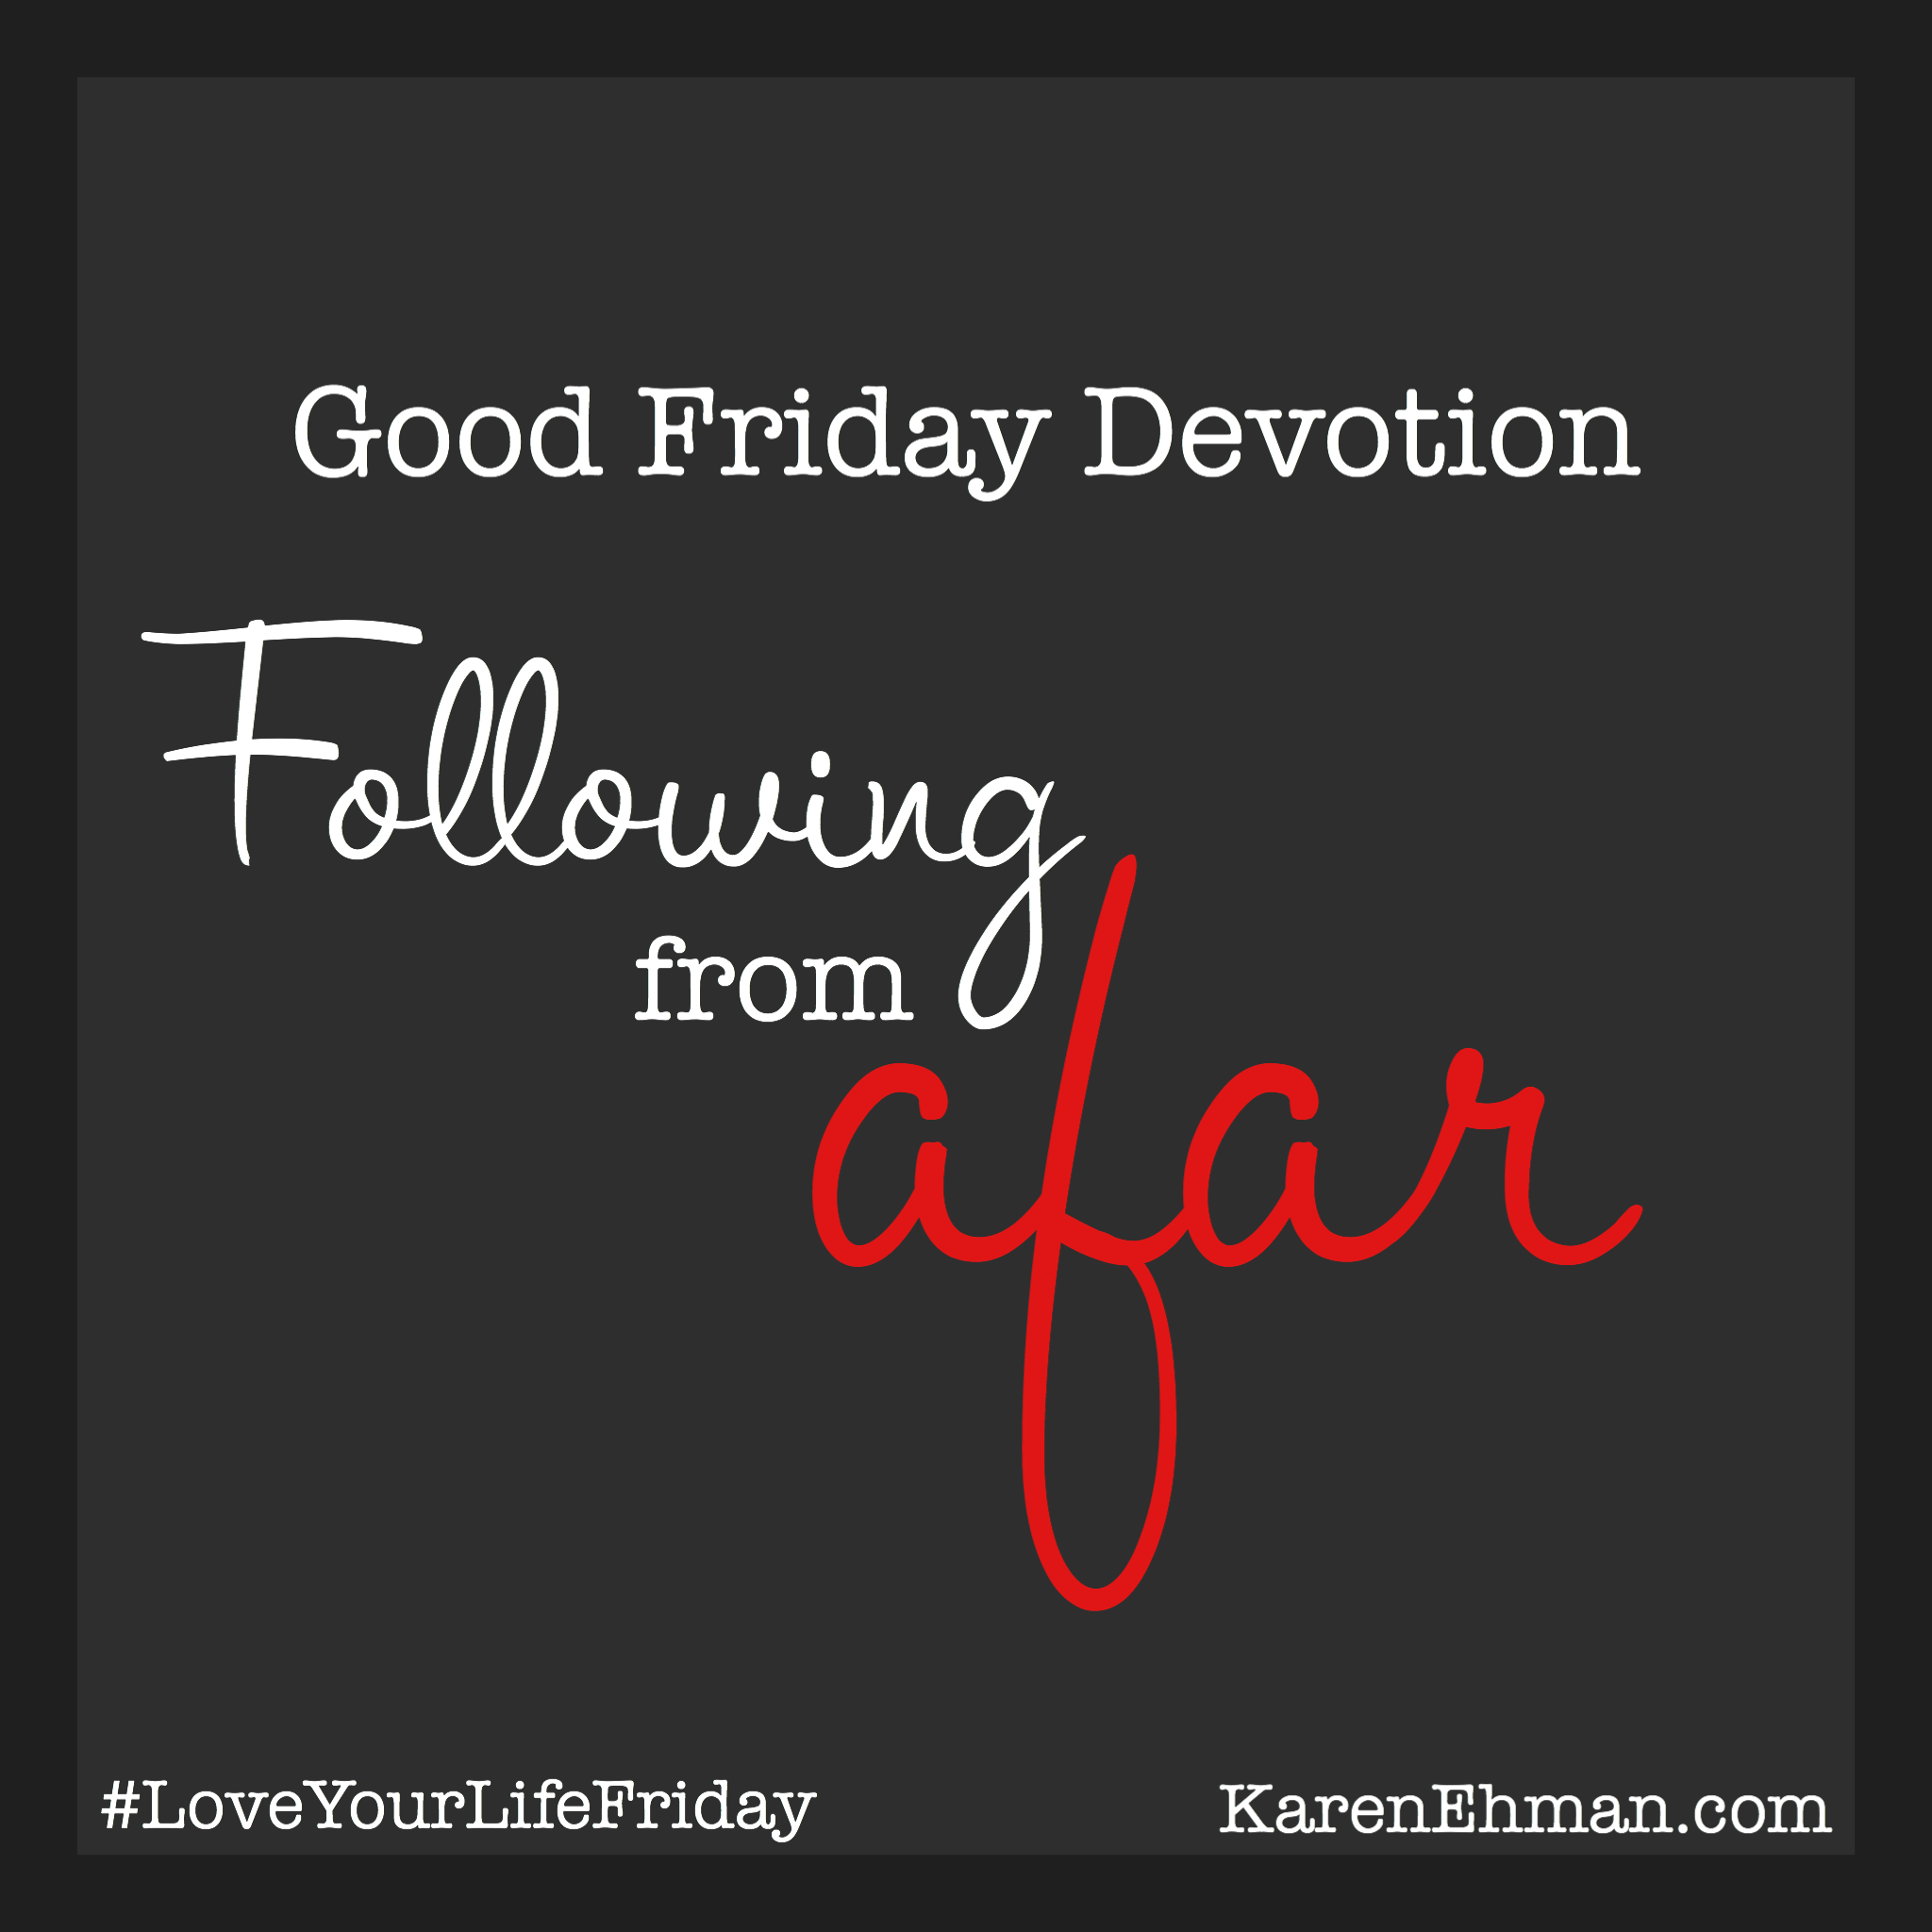 Good Friday Devotion: Following from Afar at KarenEhman.com. Mark 14:54-55